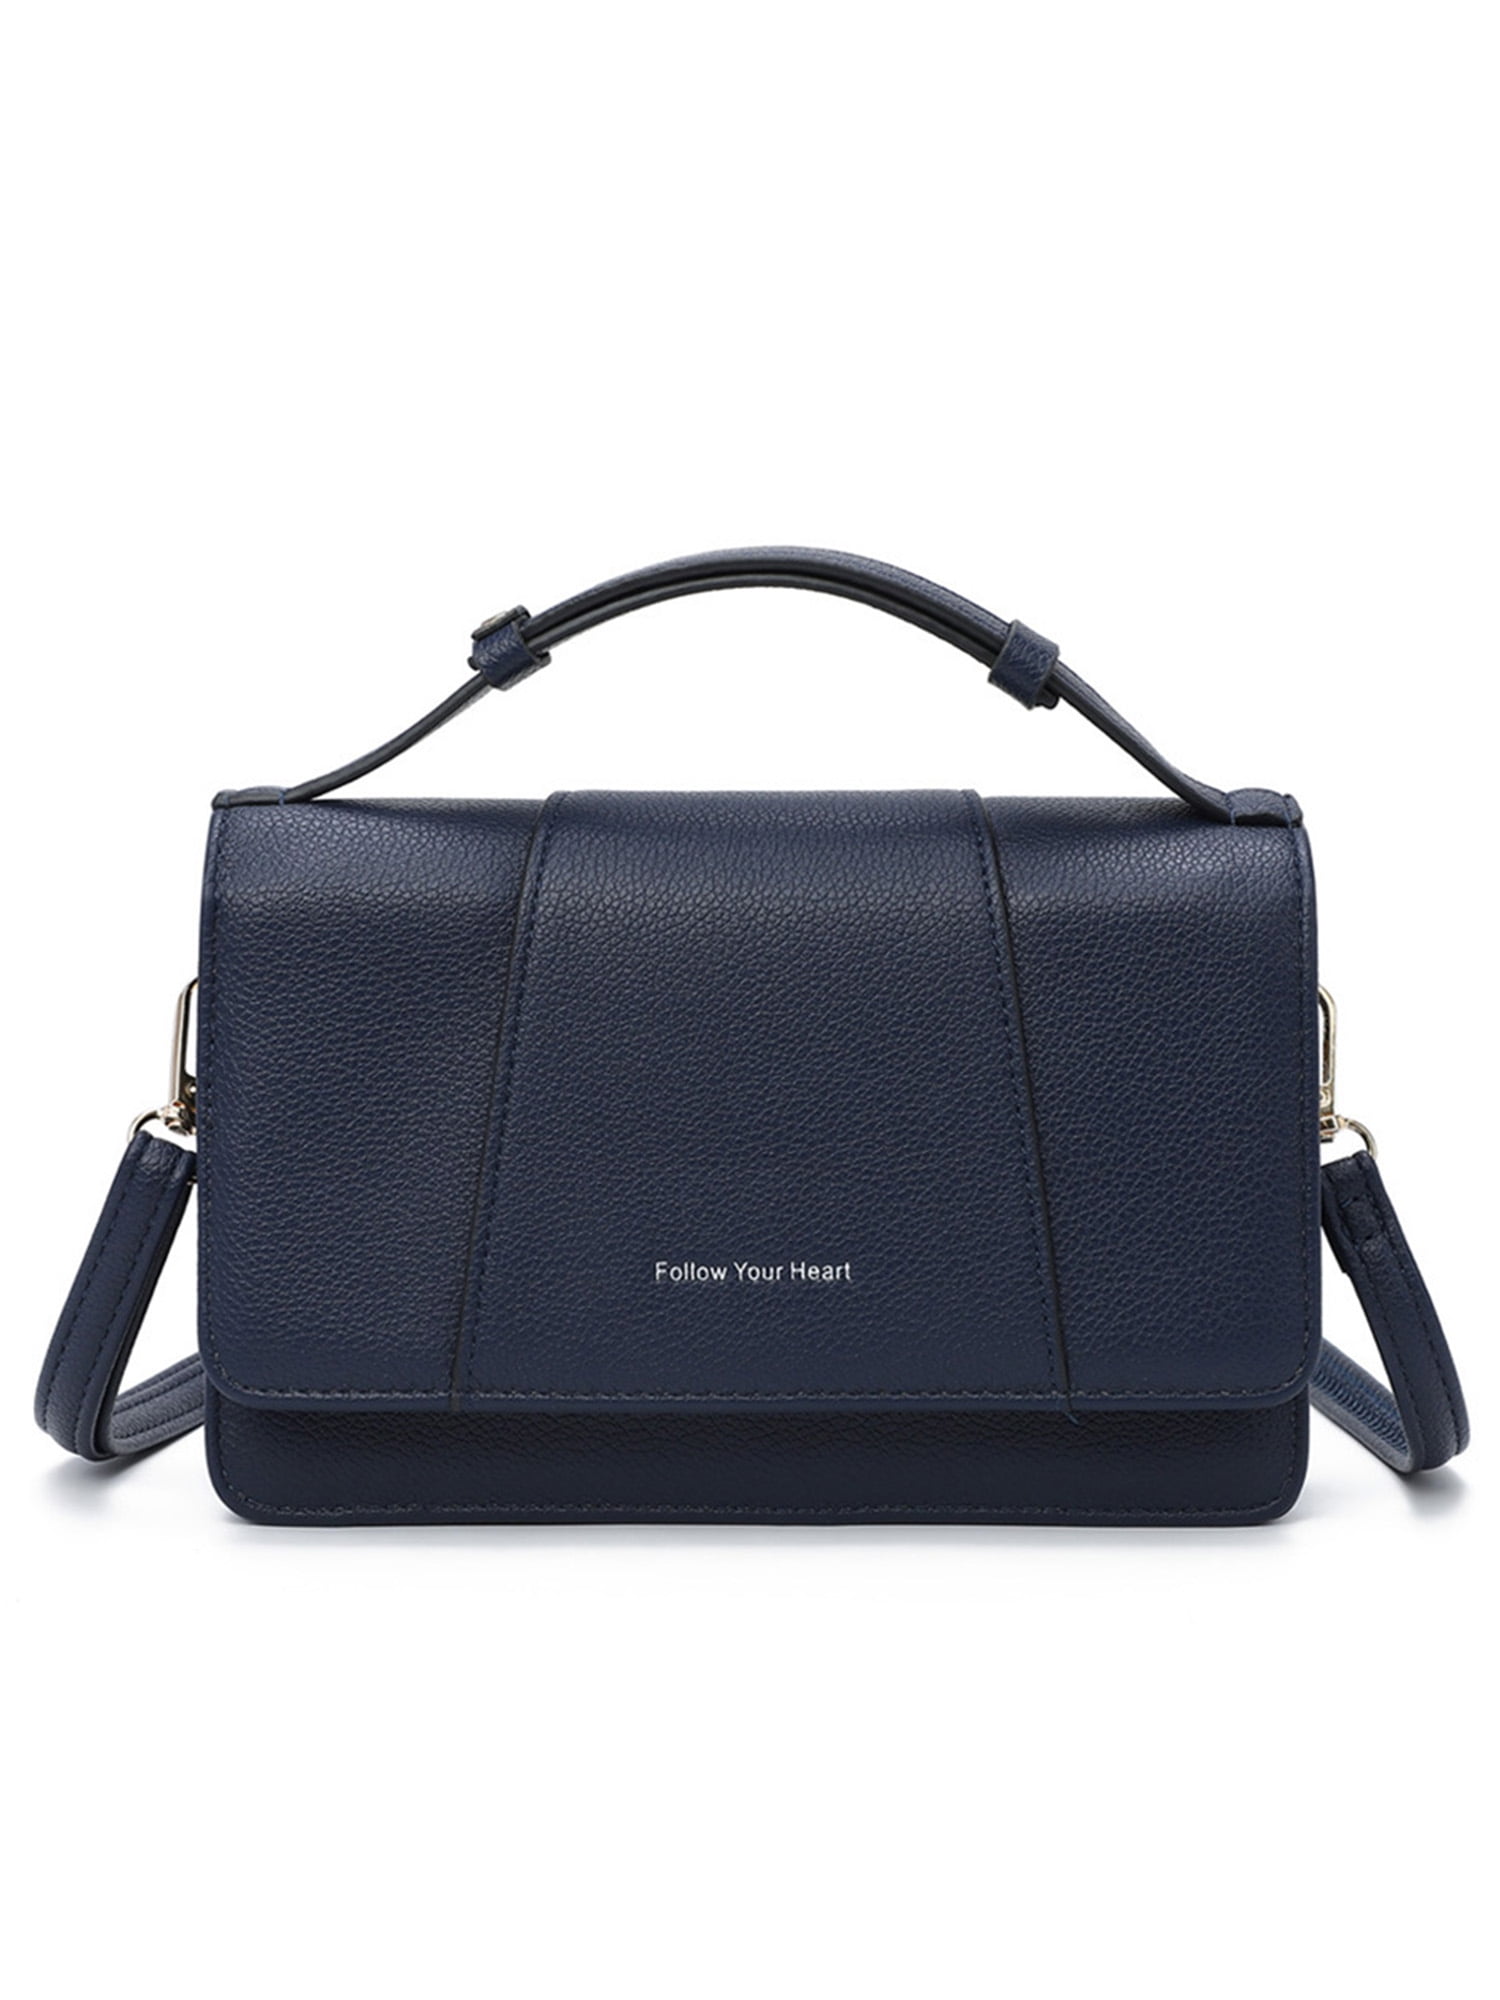 Mostdary Ladies Purse Multi Pockets Crossbody Bags Women Detachable Designer Handbag PU Leather Portable Wallet Adjustable Strap Shoulder Bag Navy Bl bda04739 4149 4990 86cb baded93bb332.9a1e1e2f6c101d9e54aaf53e6935defc